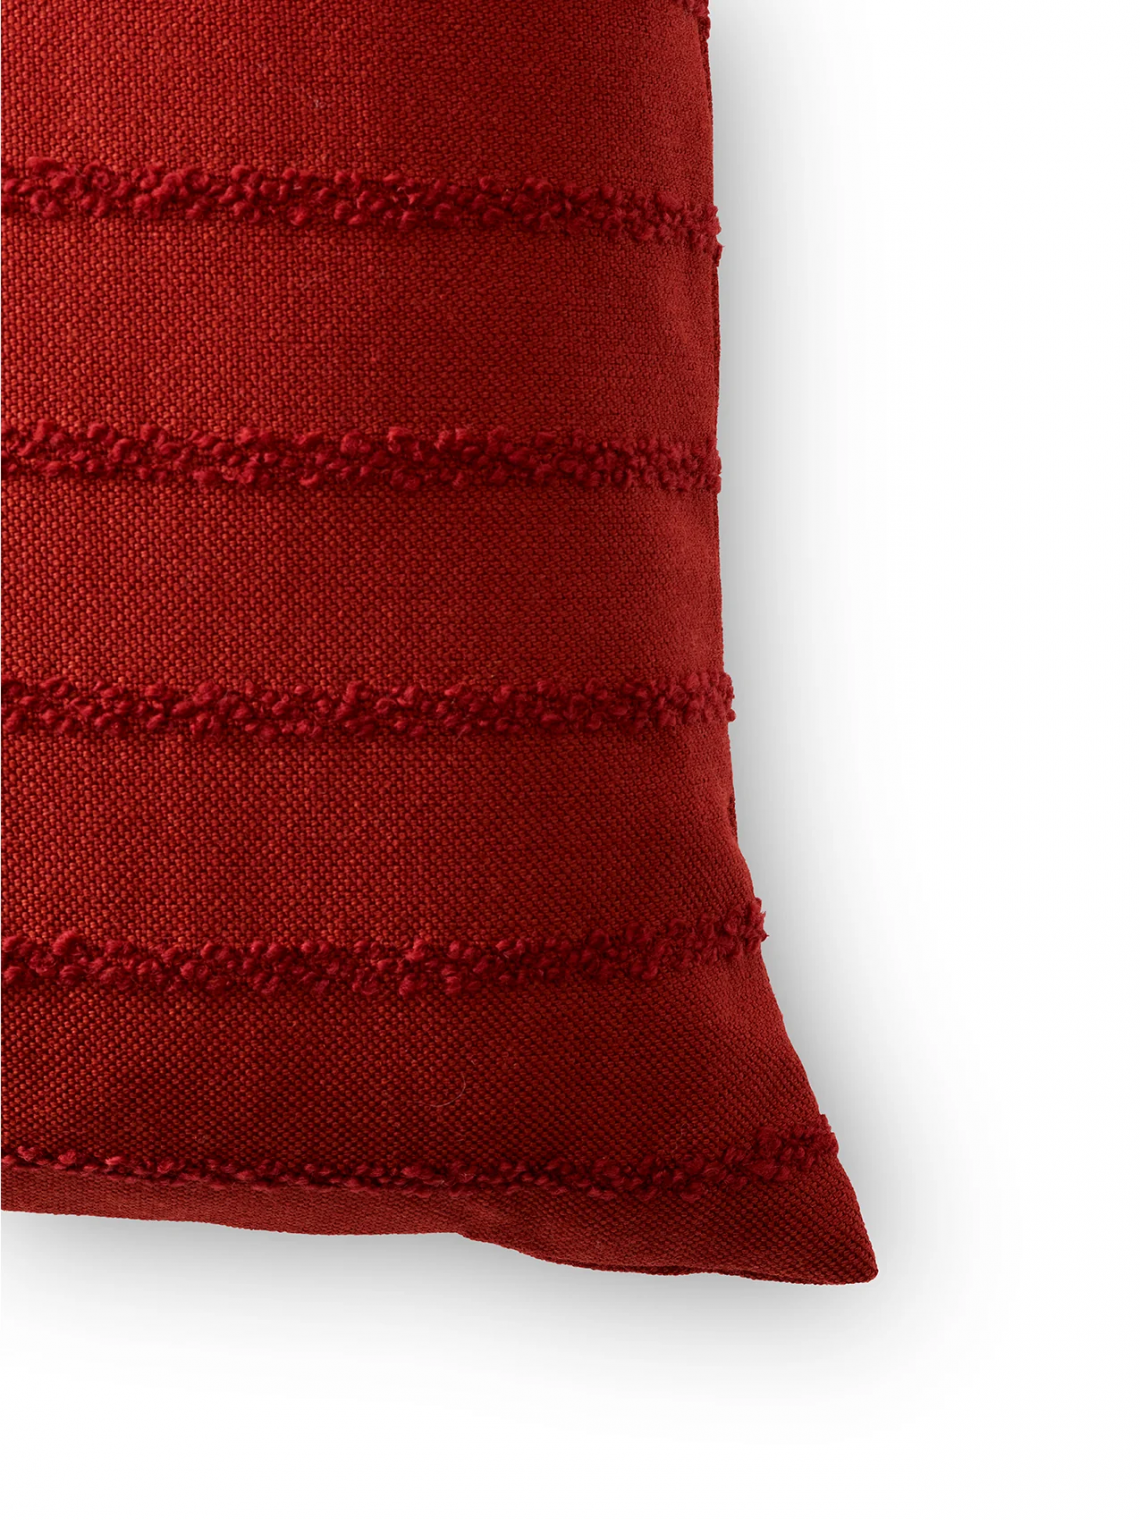 Losaria Pillow抱枕细节图8